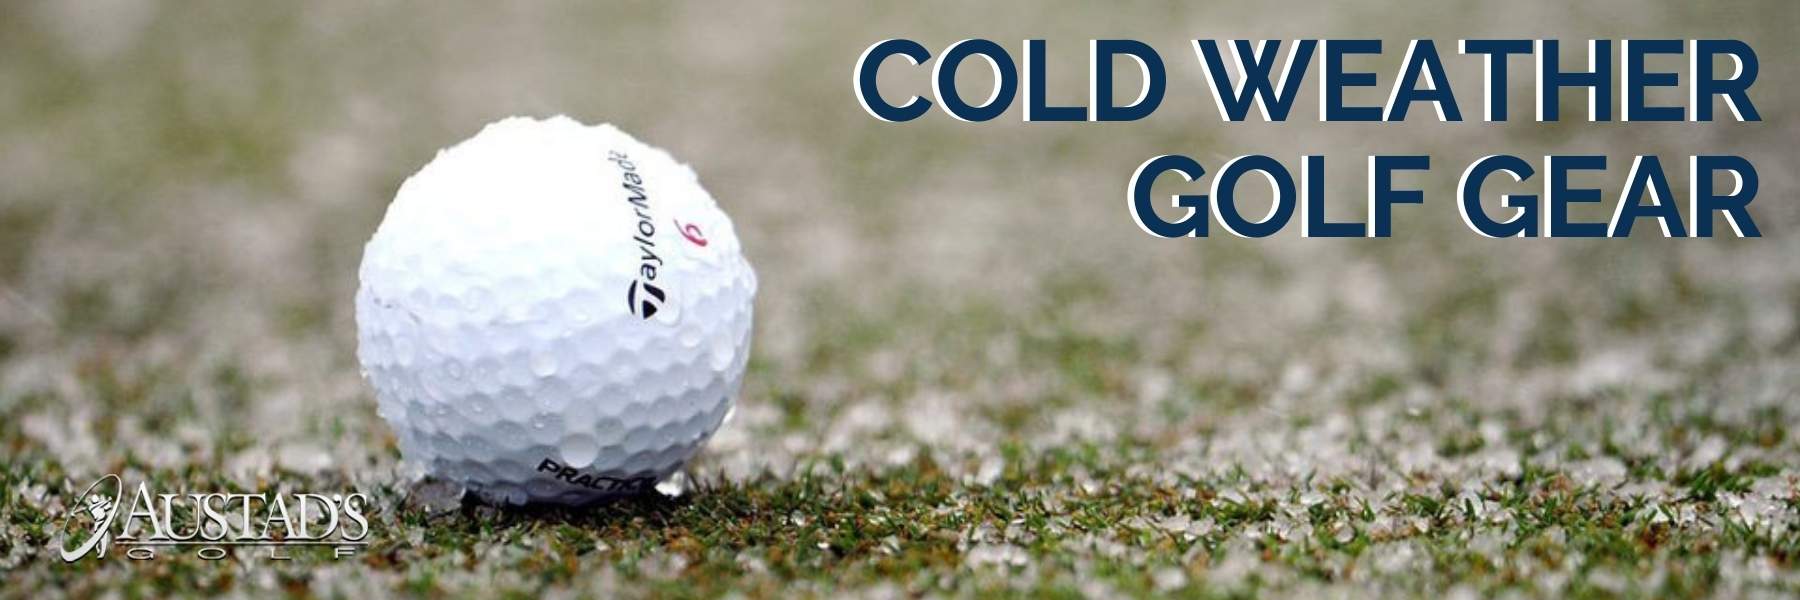 adidas cold weather golf gear